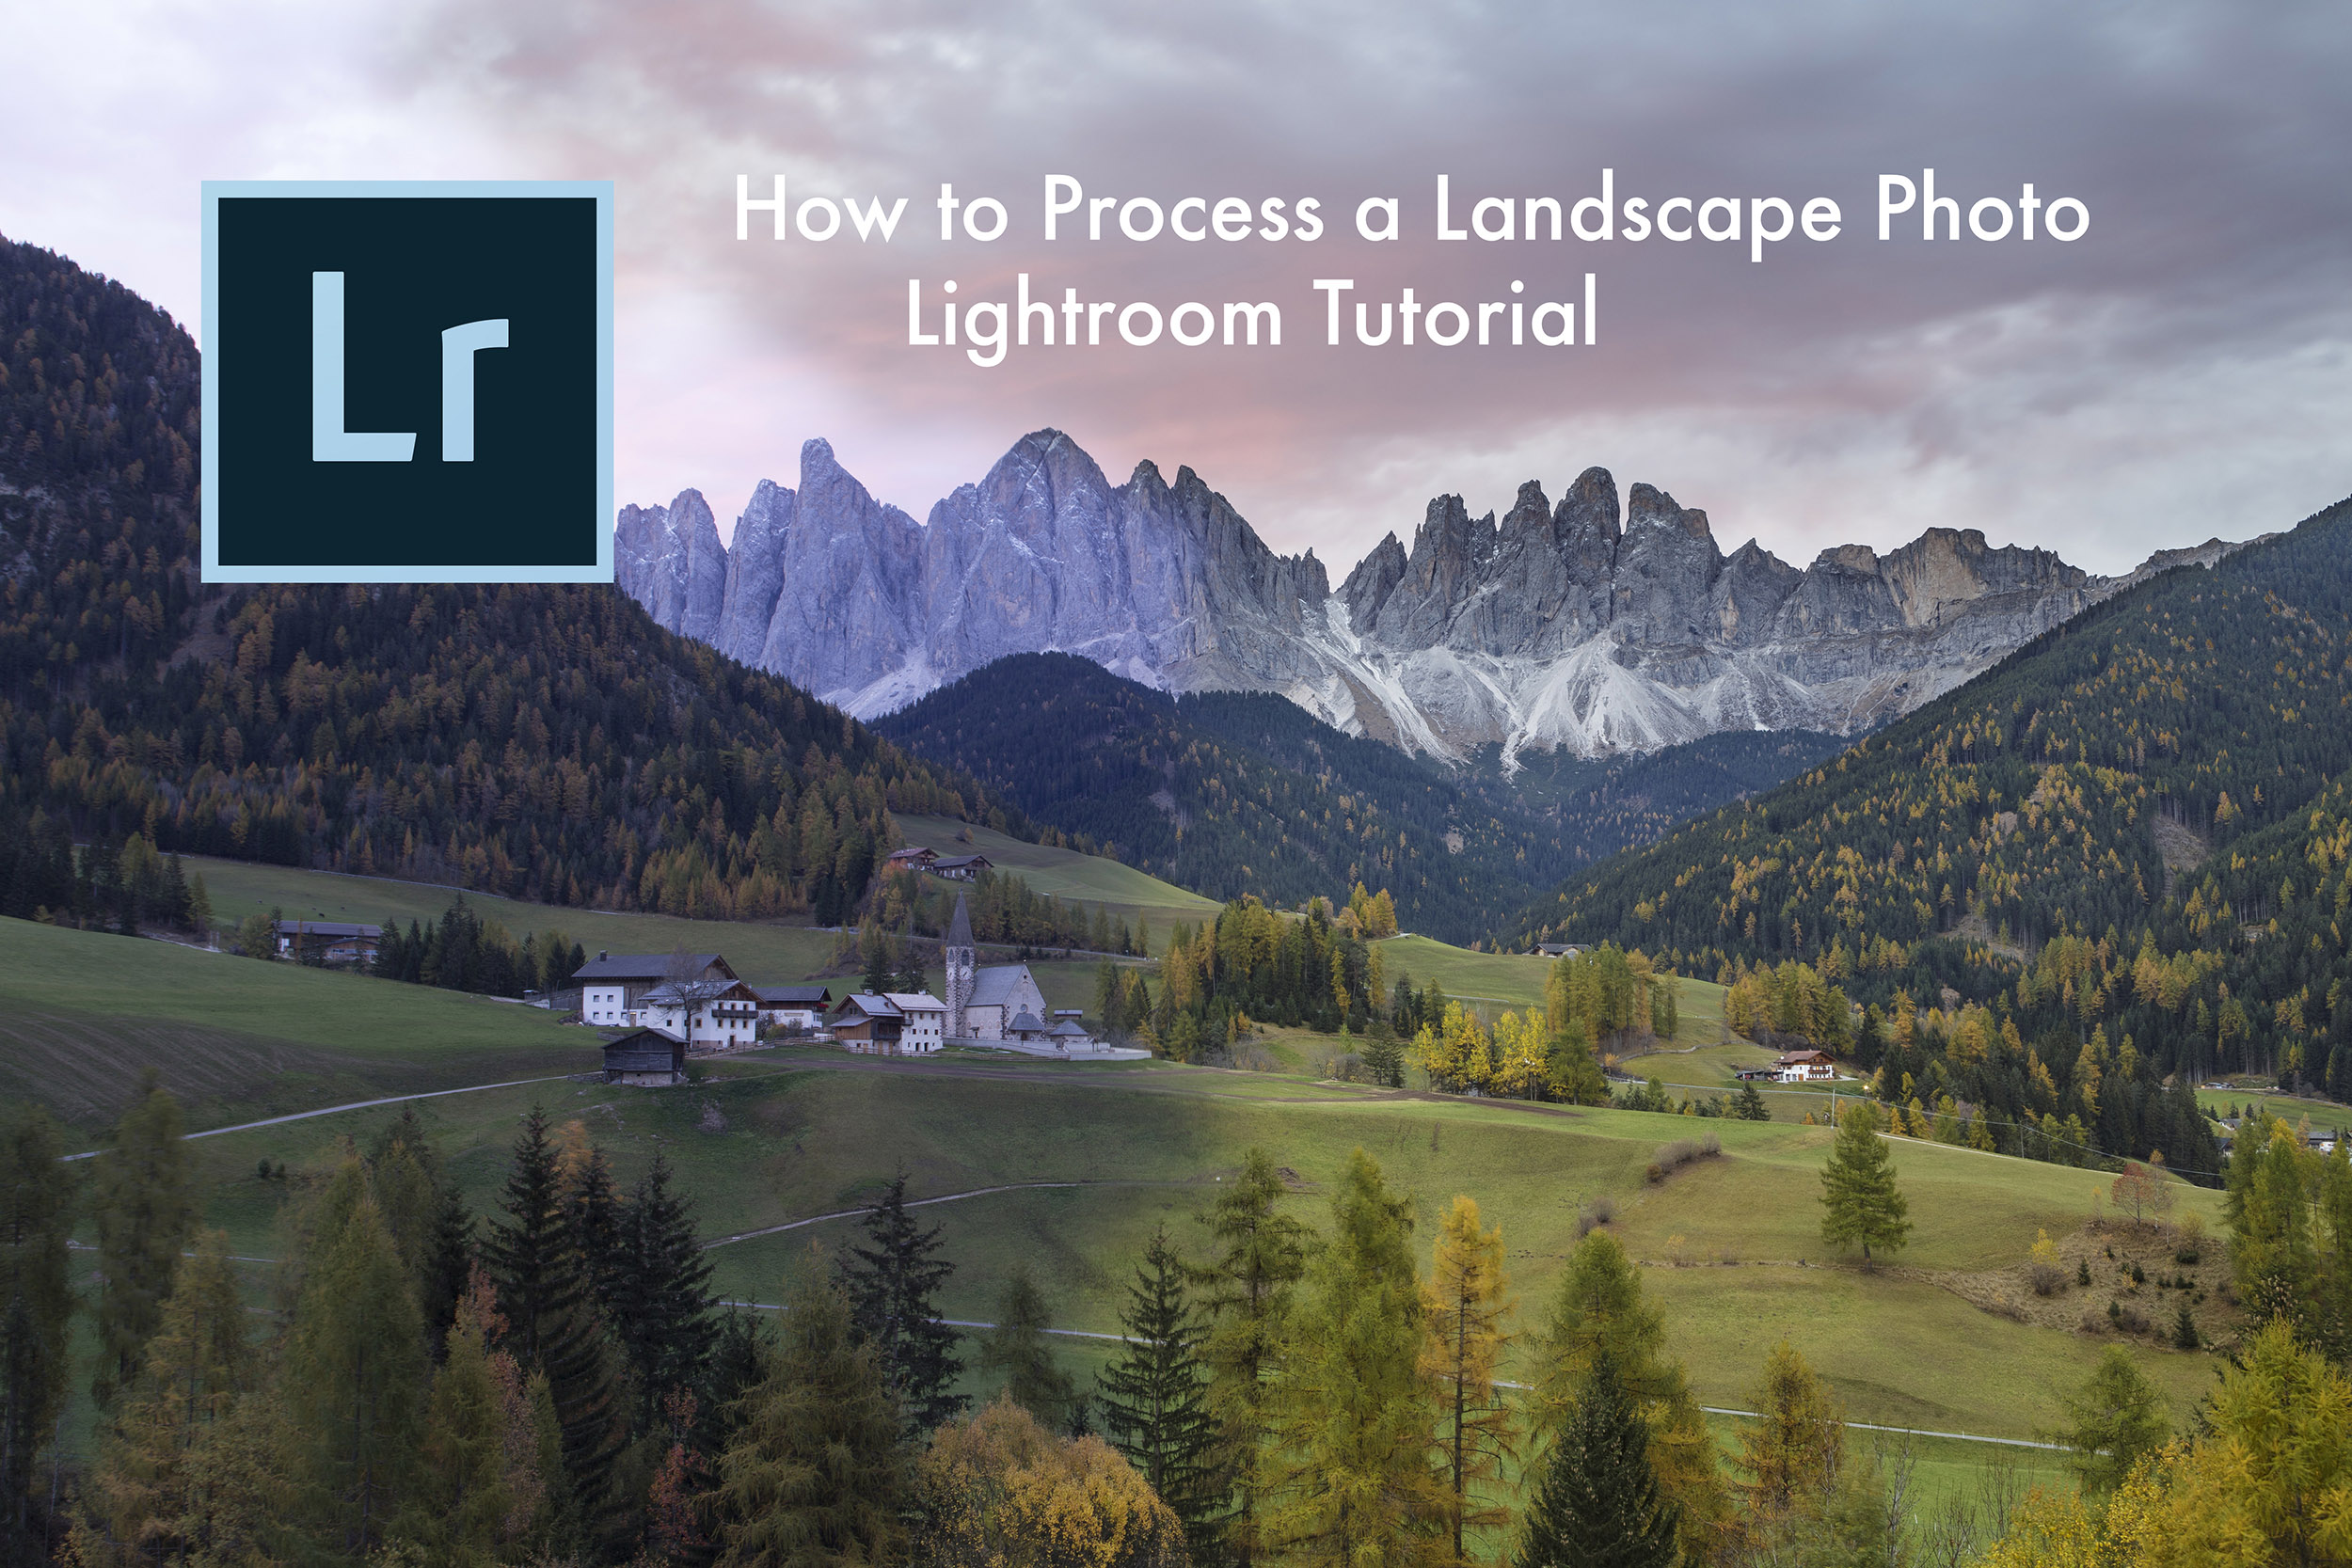 Adobe Lightroom tutorial. How to process a landscape photo in Lightroom.